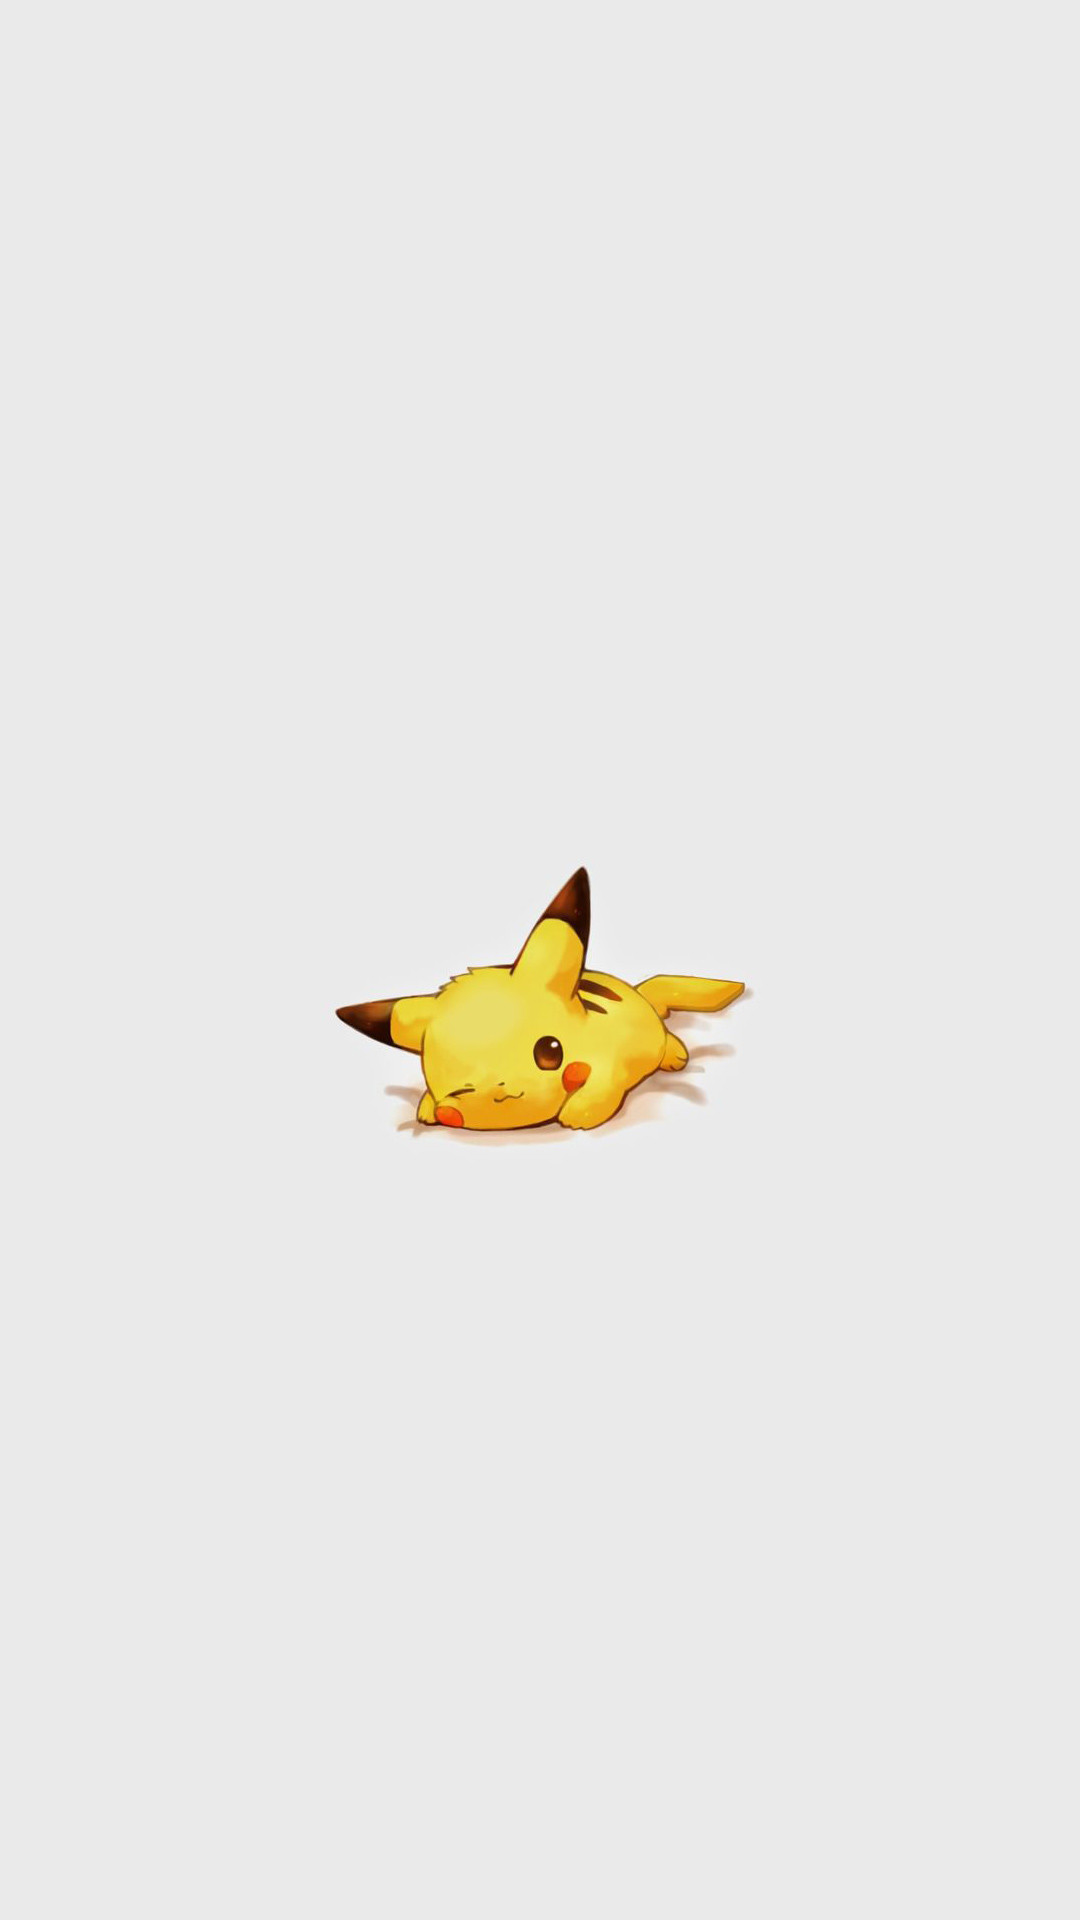 1080x1920 Cute Pikachu Pokemon GO Illustration Android Wallpaper